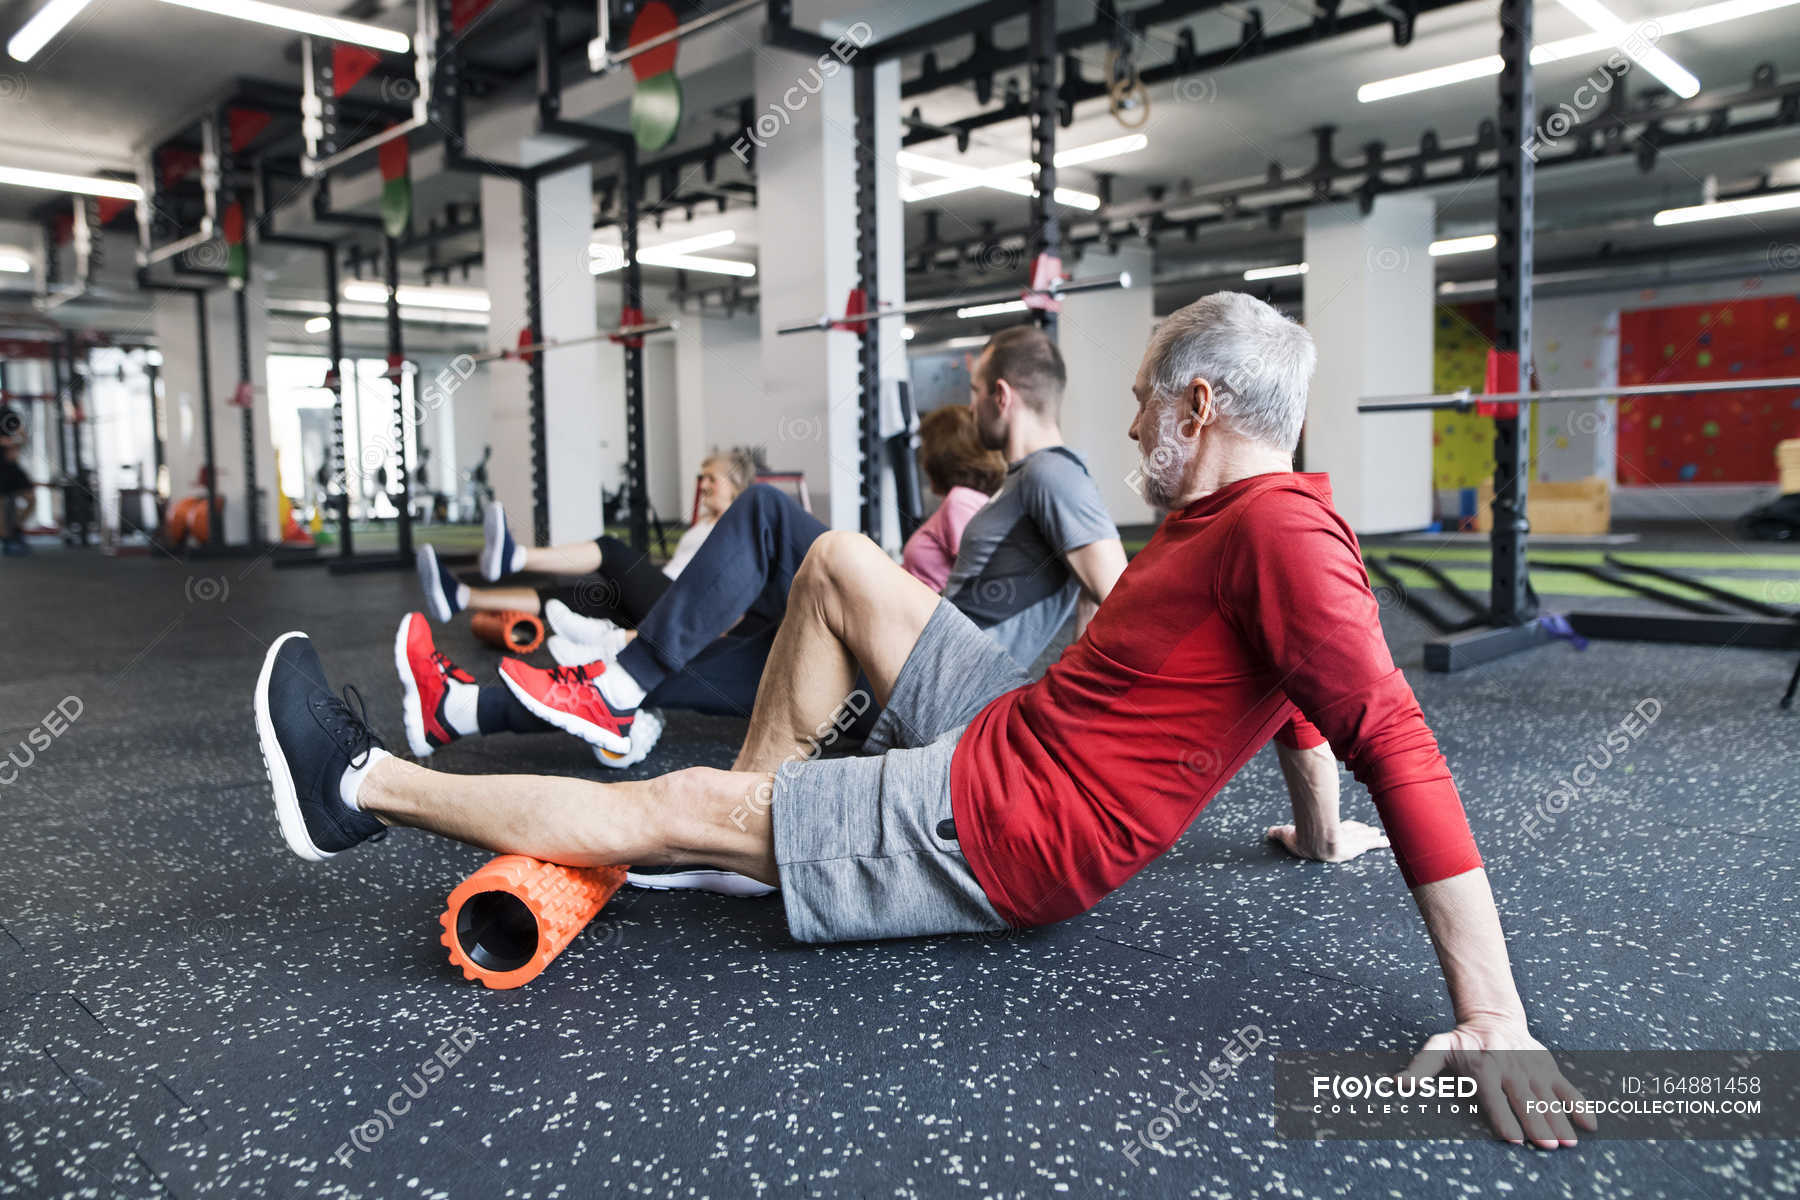 Seniors using foam rollers in gym — 30 years, endurance - Stock Photo | #164881458